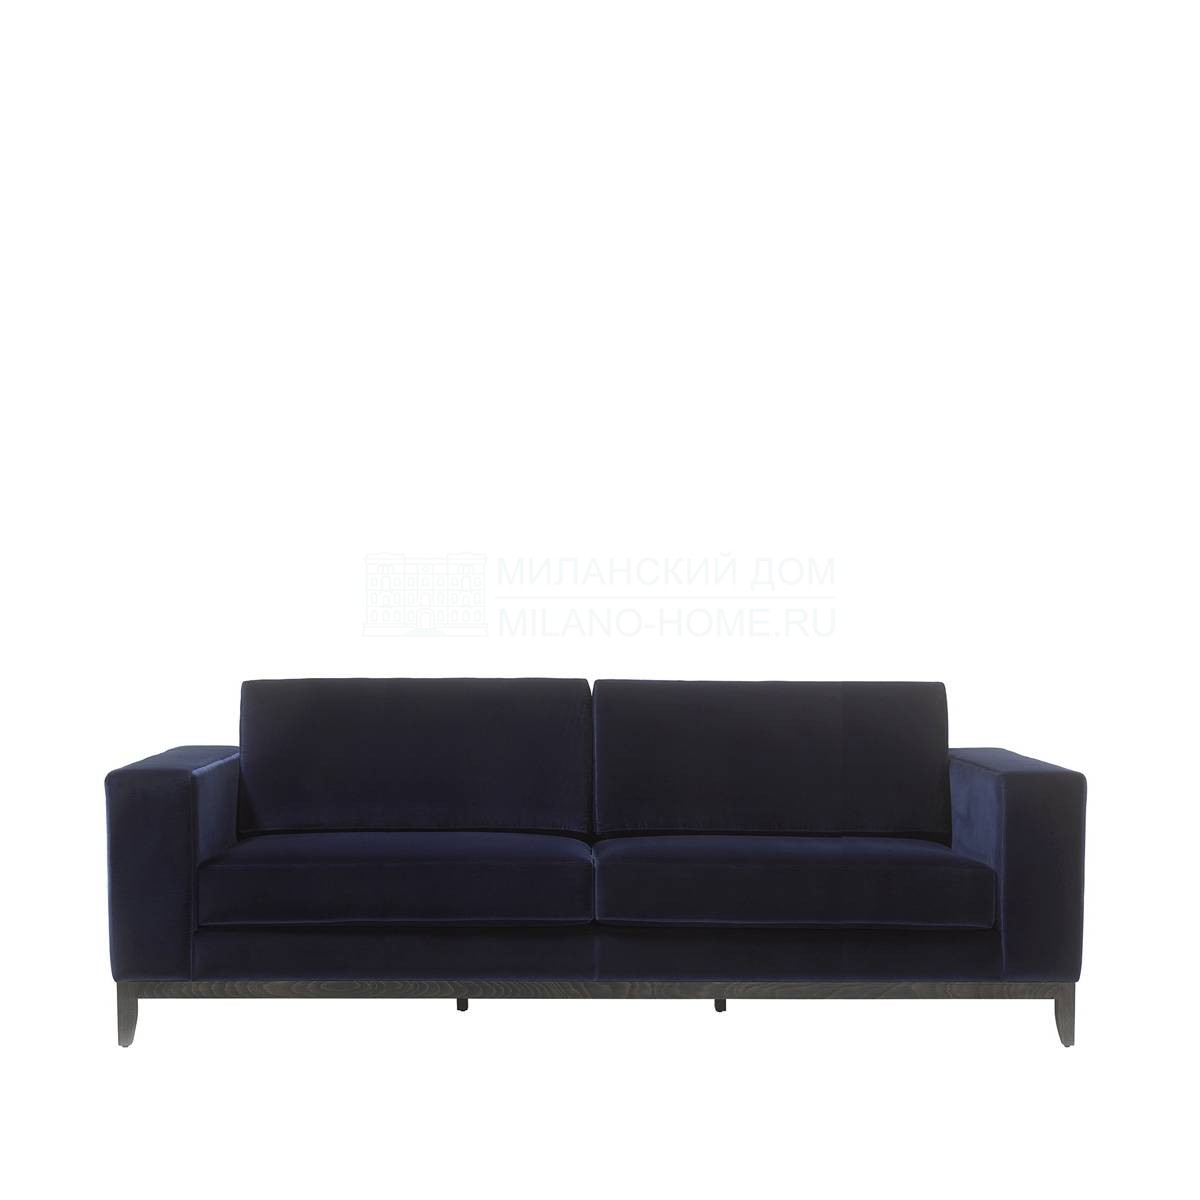 Прямой диван Nantes sofa из Испании фабрики COLECCION ALEXANDRA